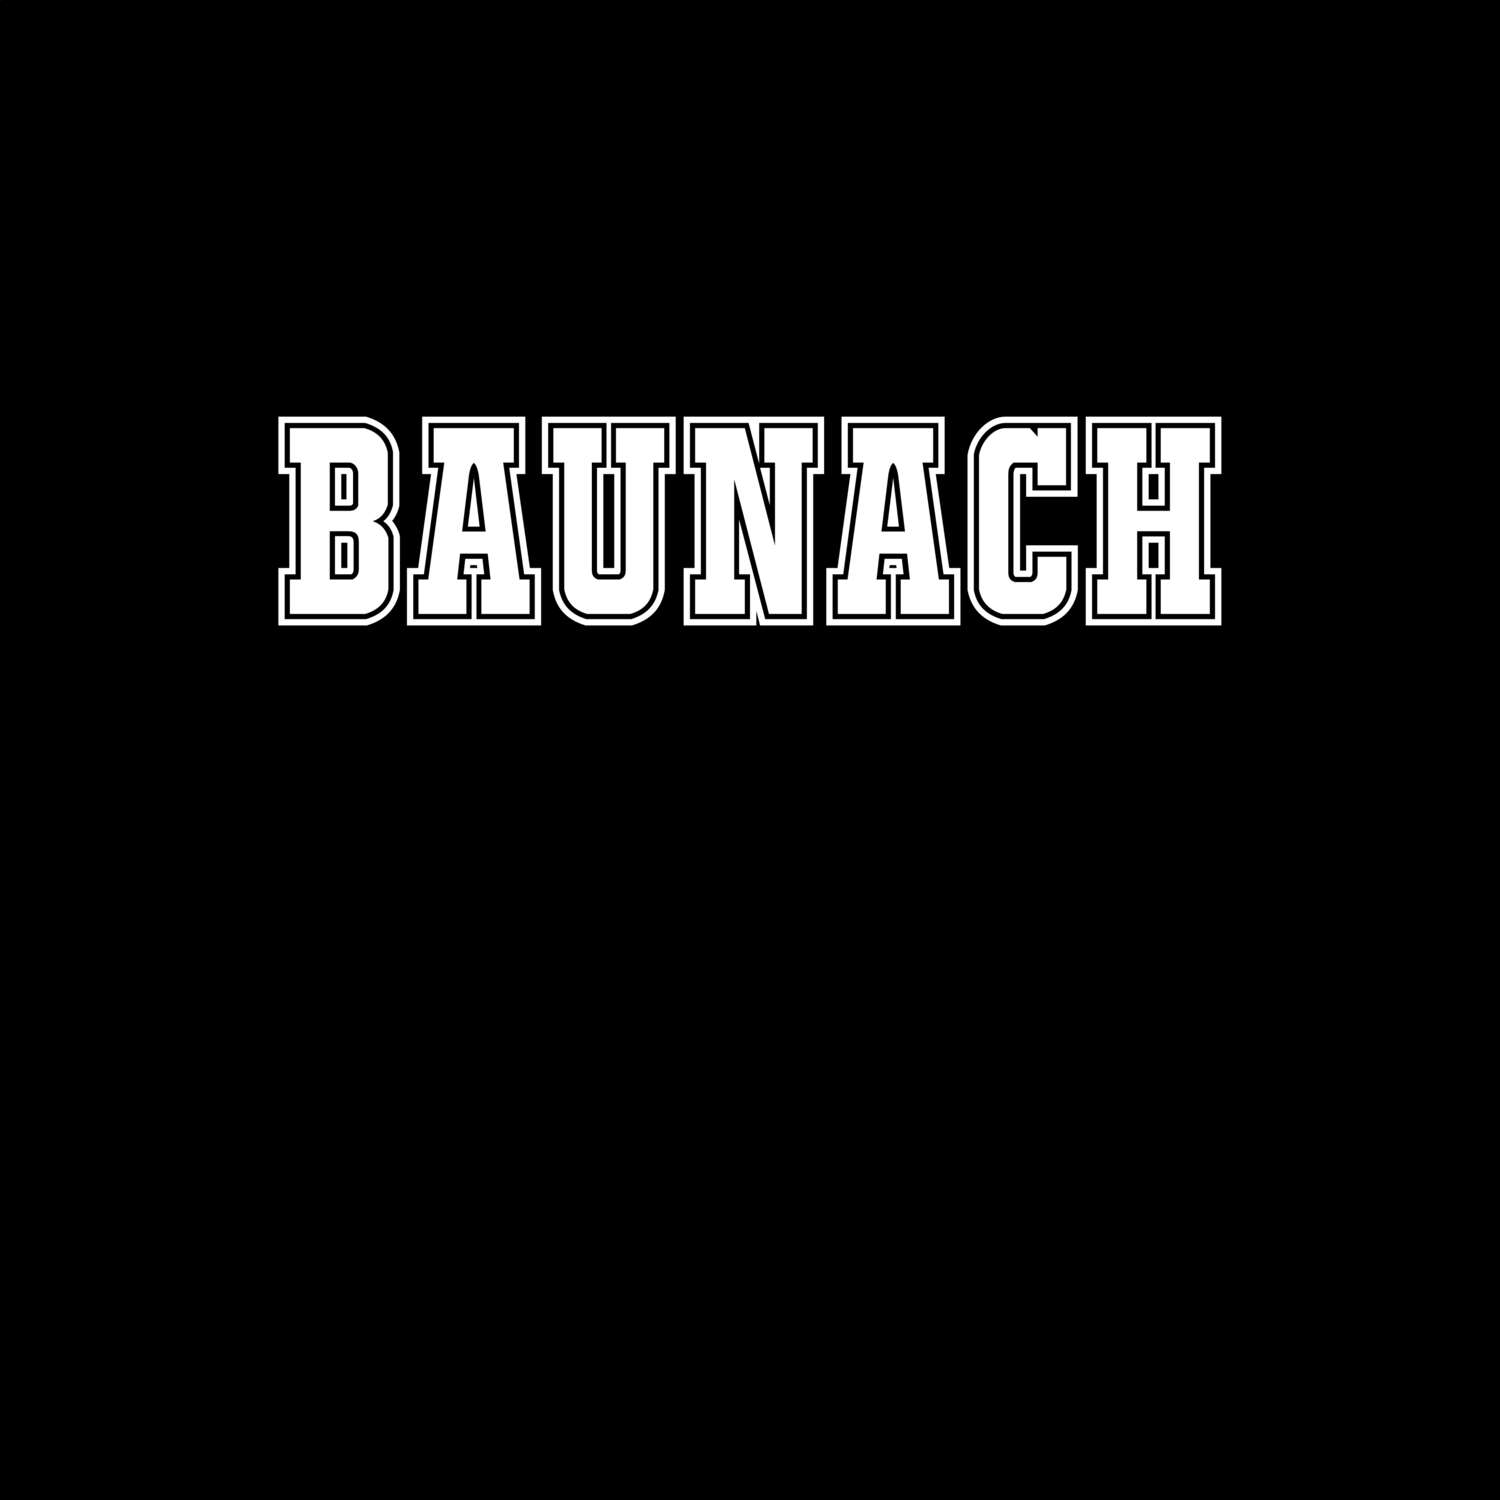 Baunach T-Shirt »Classic«